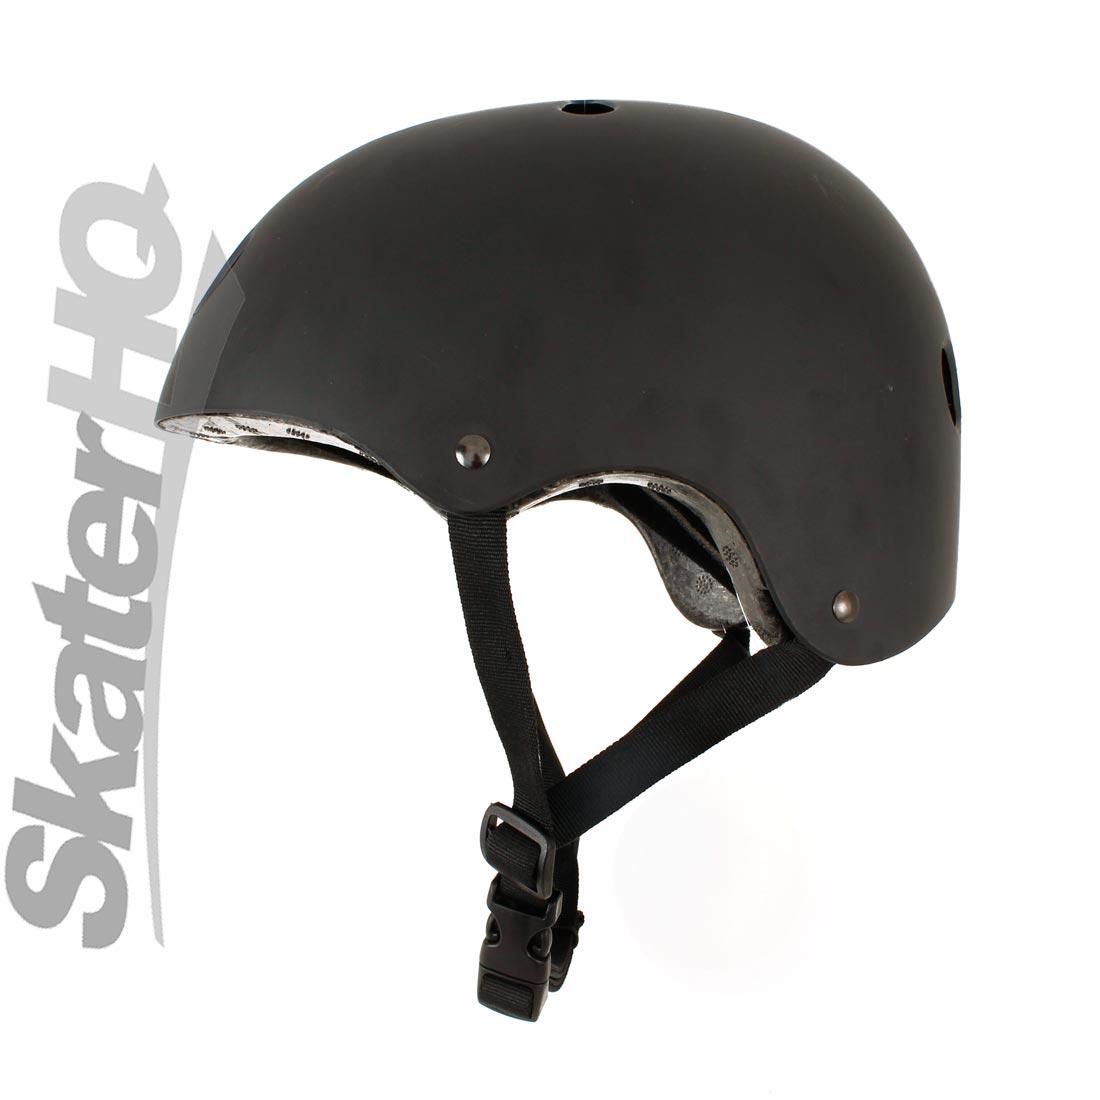 Banzai Bike Helmet Matte Black - S/M Helmets